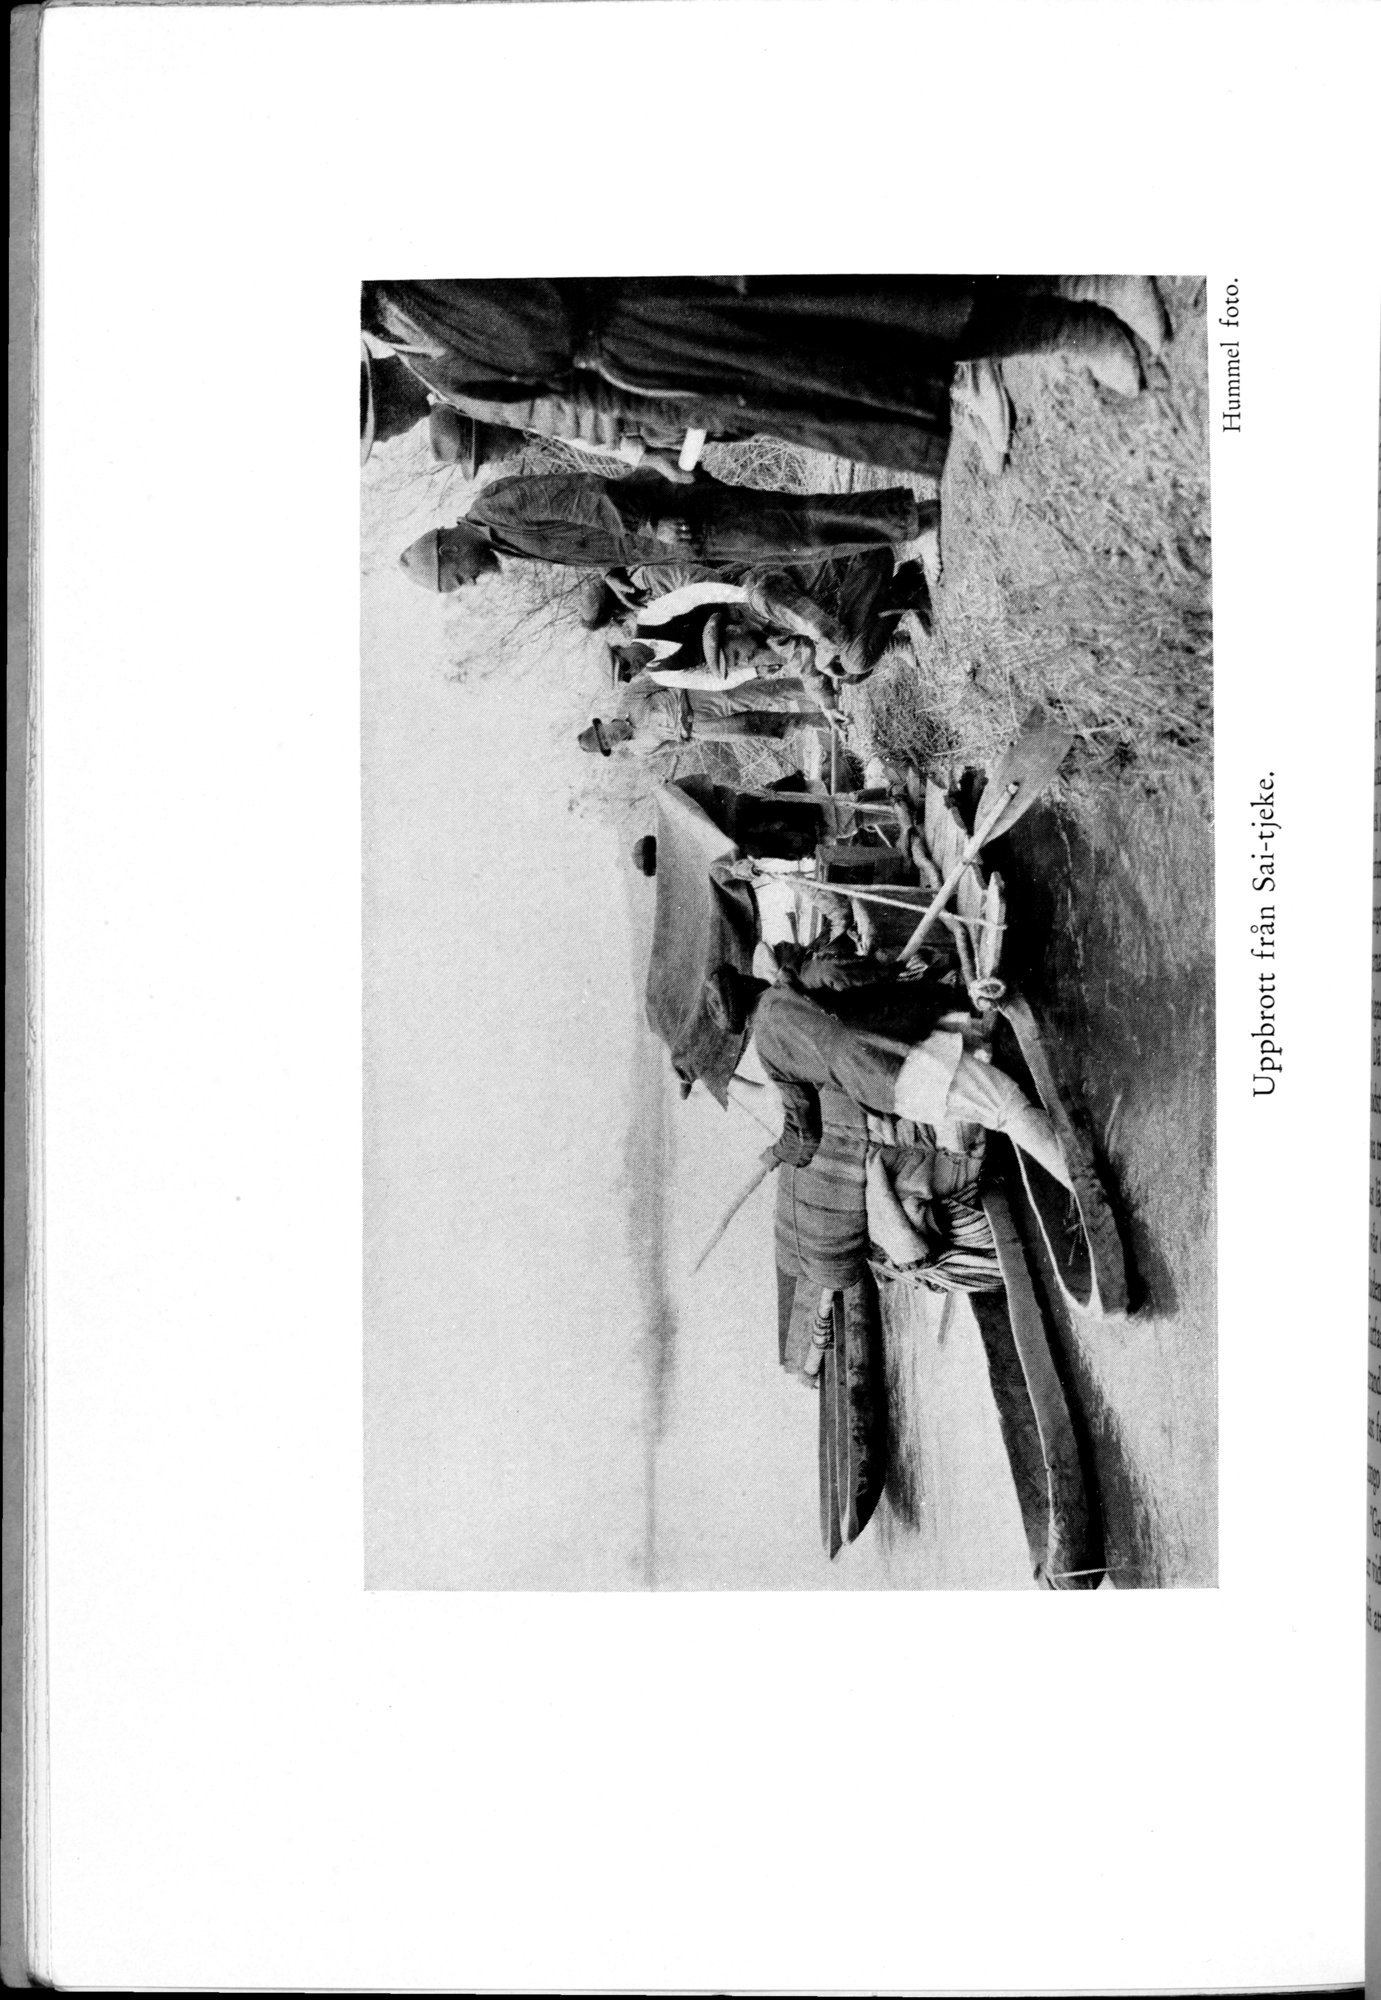 Den Vandrande Sjön : vol.1 / Page 62 (Grayscale High Resolution Image)